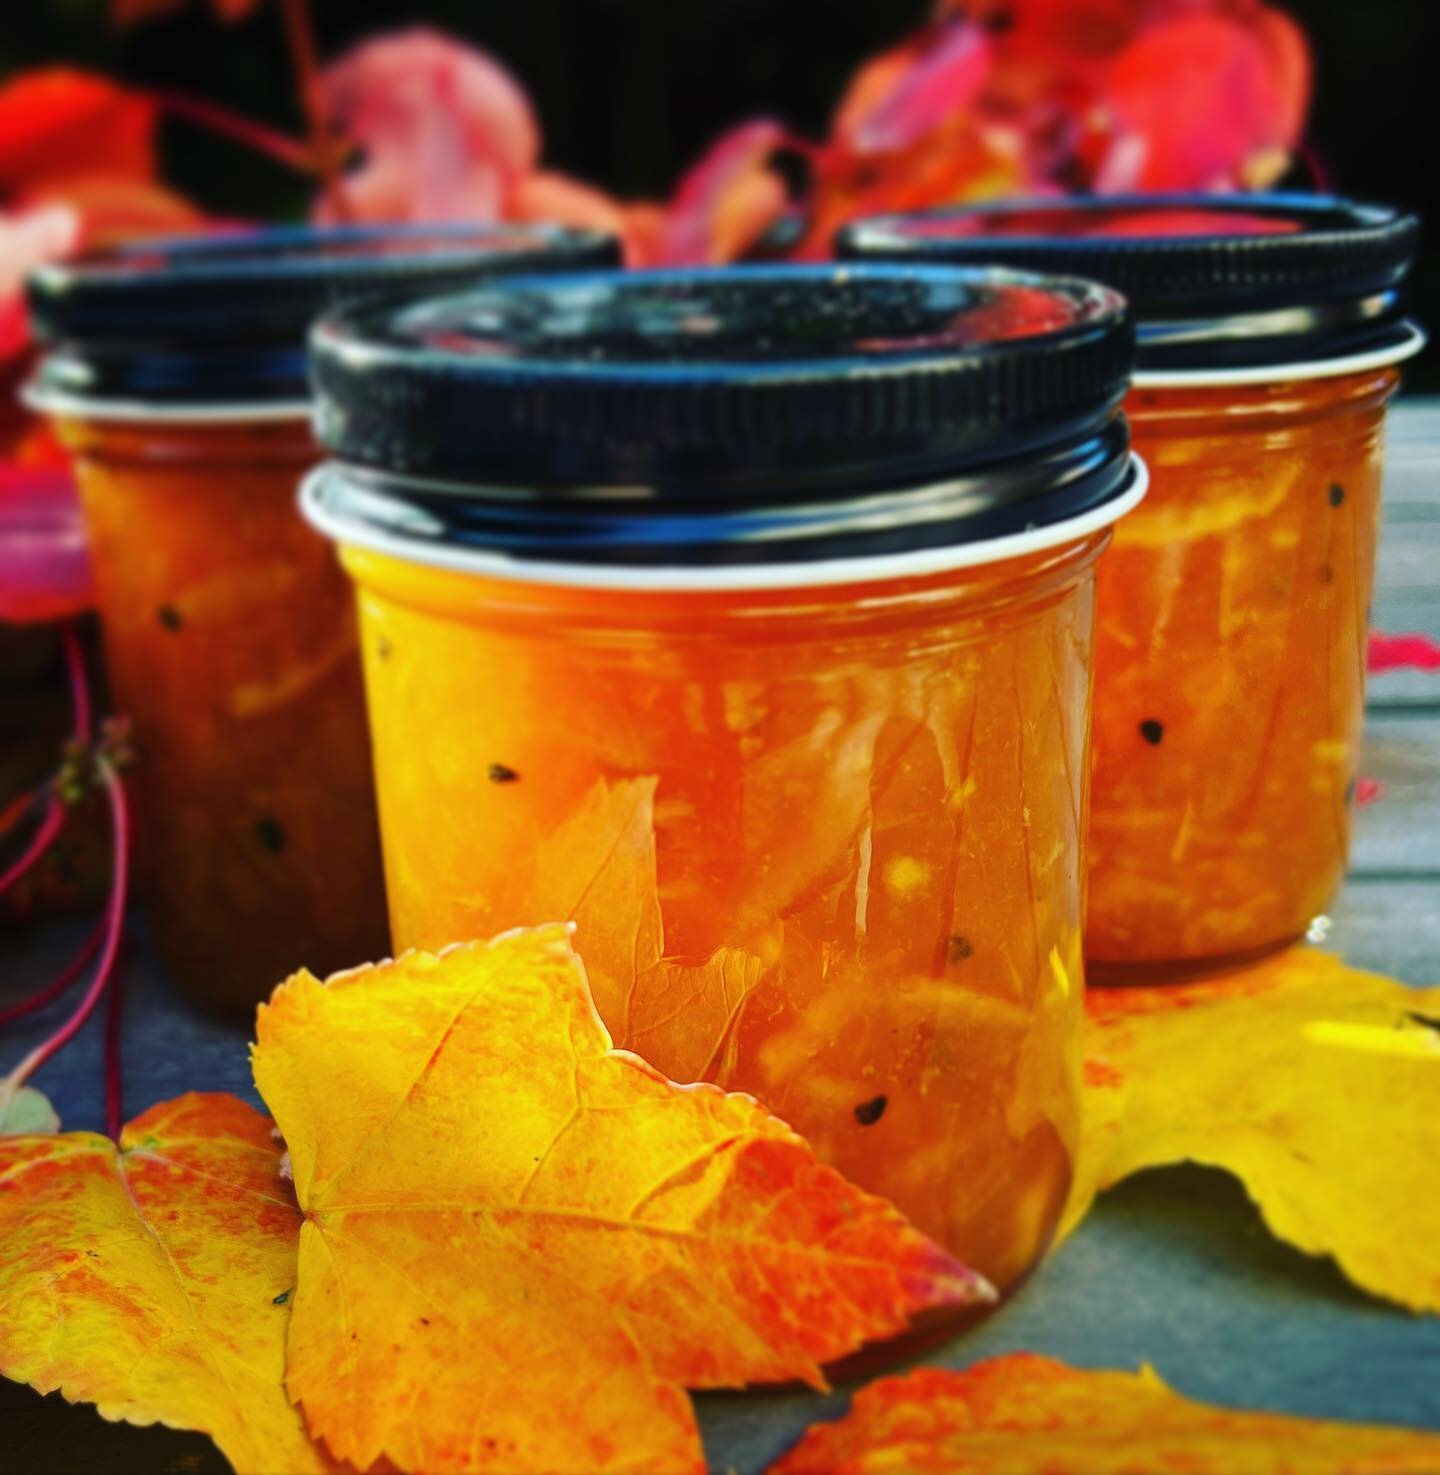 Feels like Fall in the Bay Area 🍁 🍂 🍊 🥃 #orange #cardamom #bourbon #marmalade #alamedafruitco #marmalademamas #eastbayeats